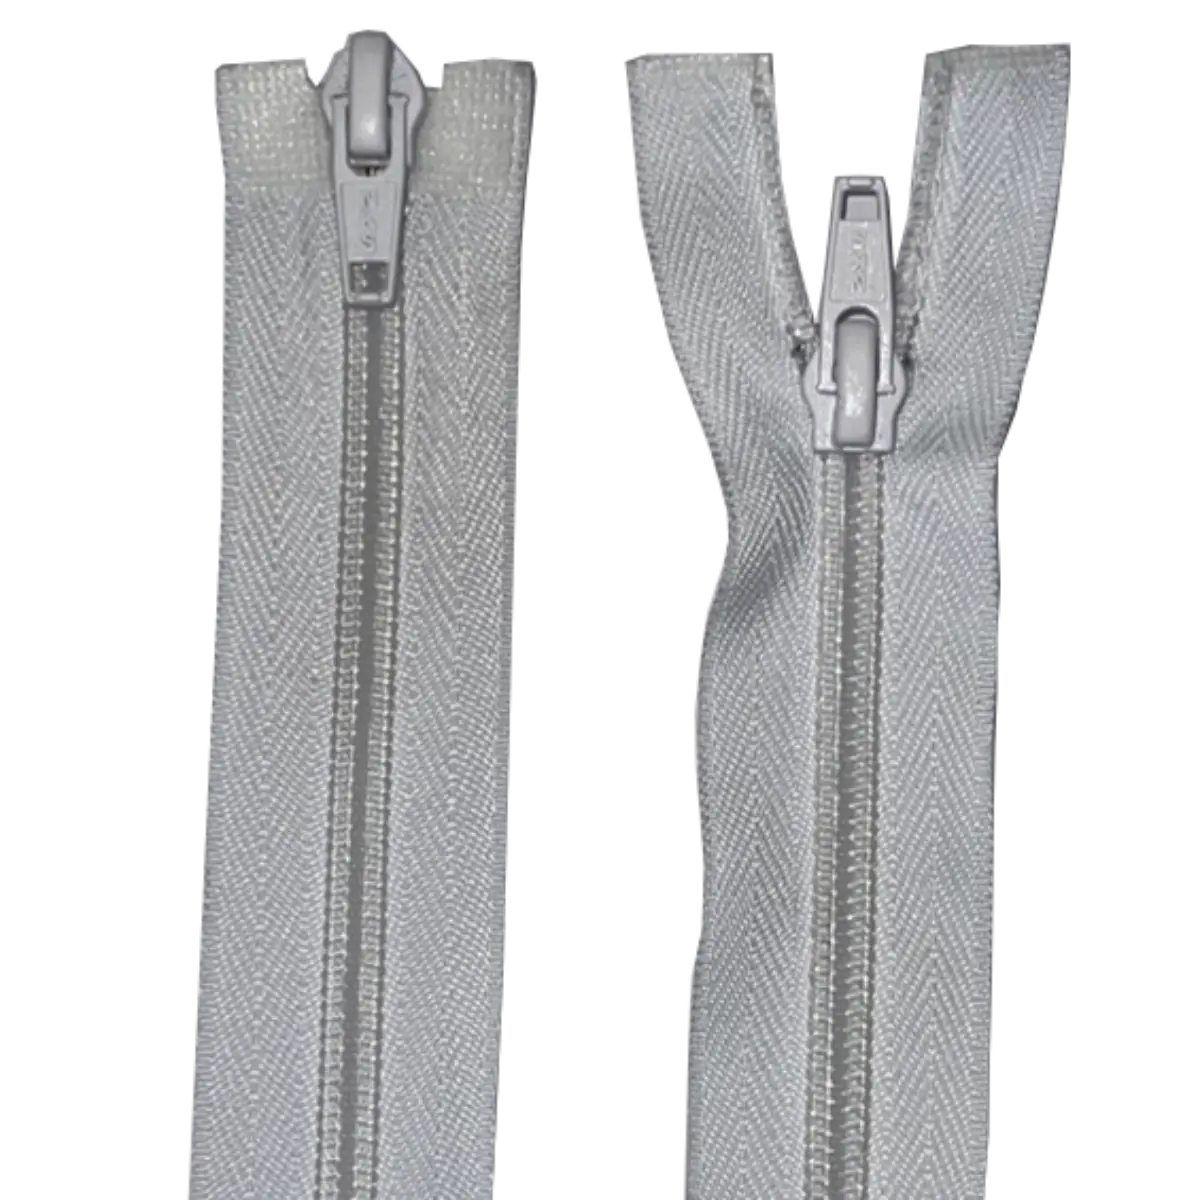 Double Slider 2 Way Nylon/Plastic Zip - With Metal Sliders 16" (40cm)